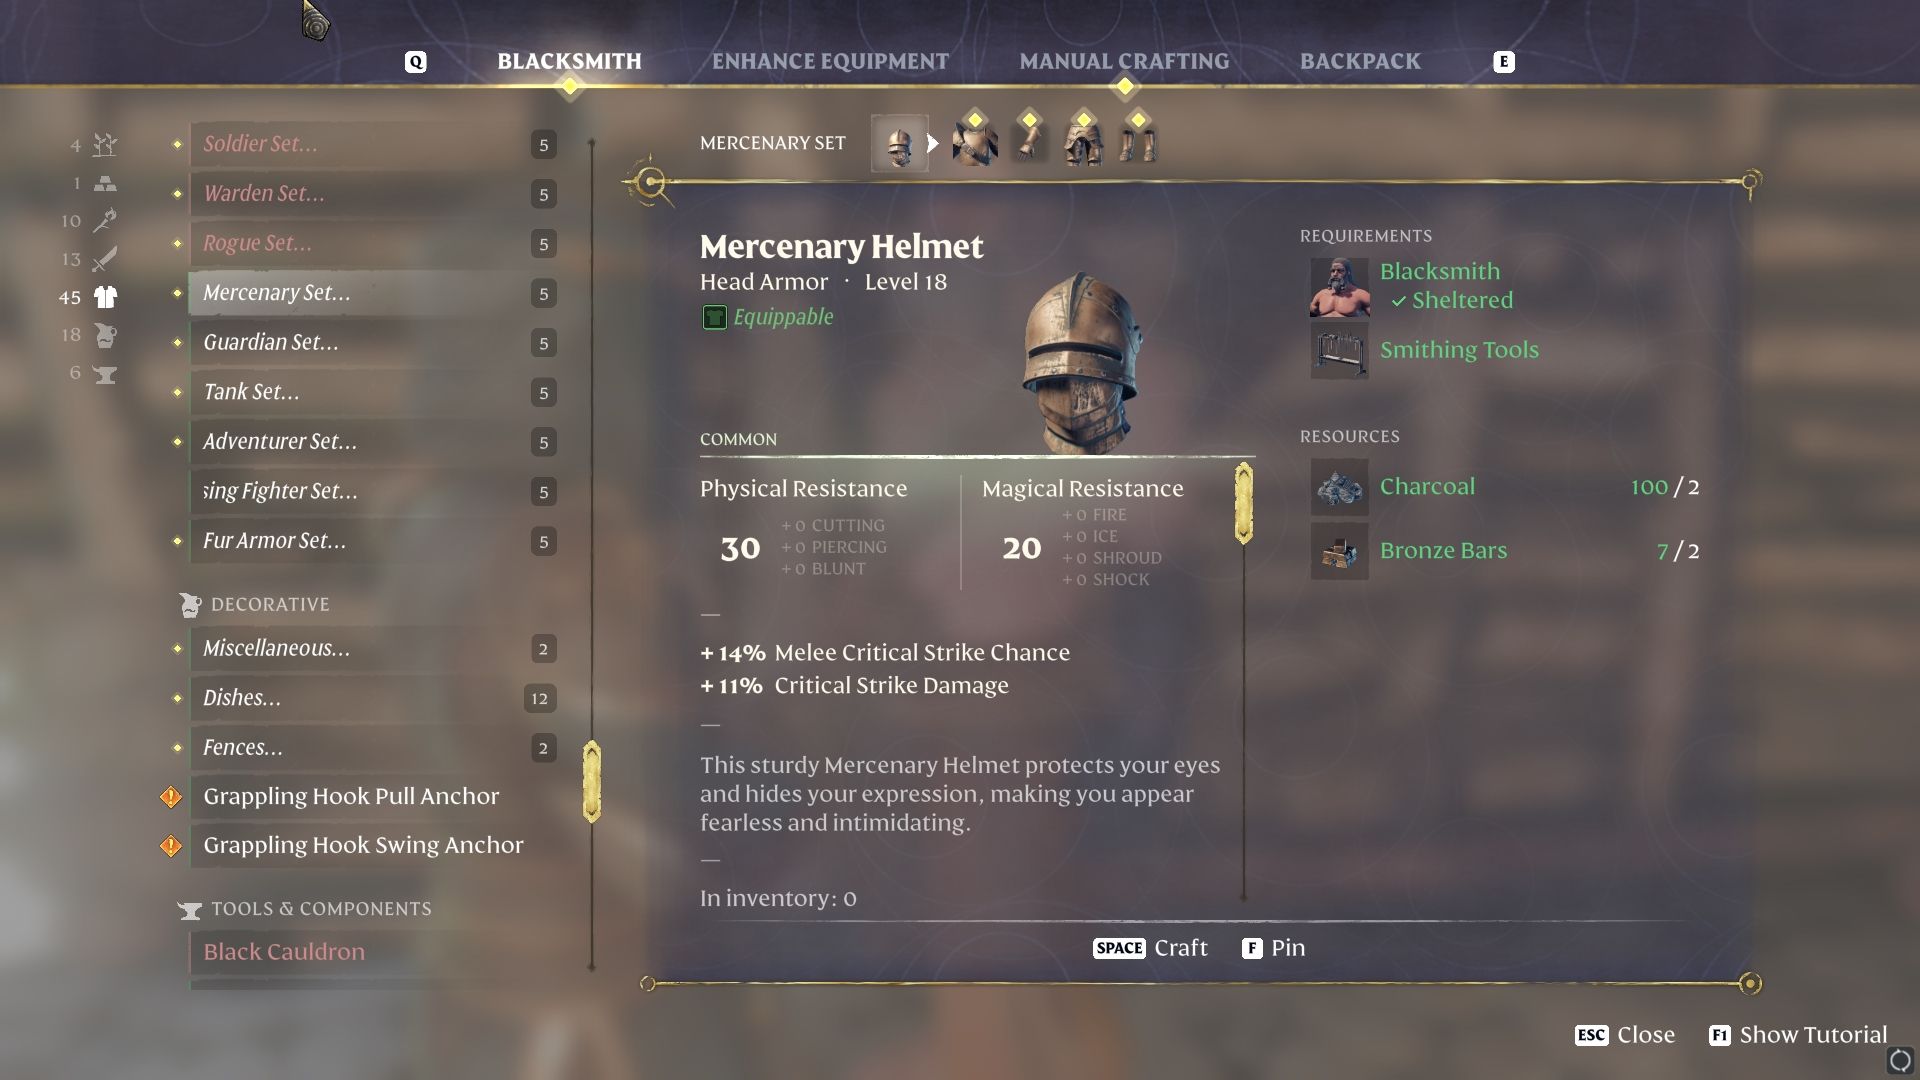 Mercenary Helmet needing Charcoal and Bronze Bars